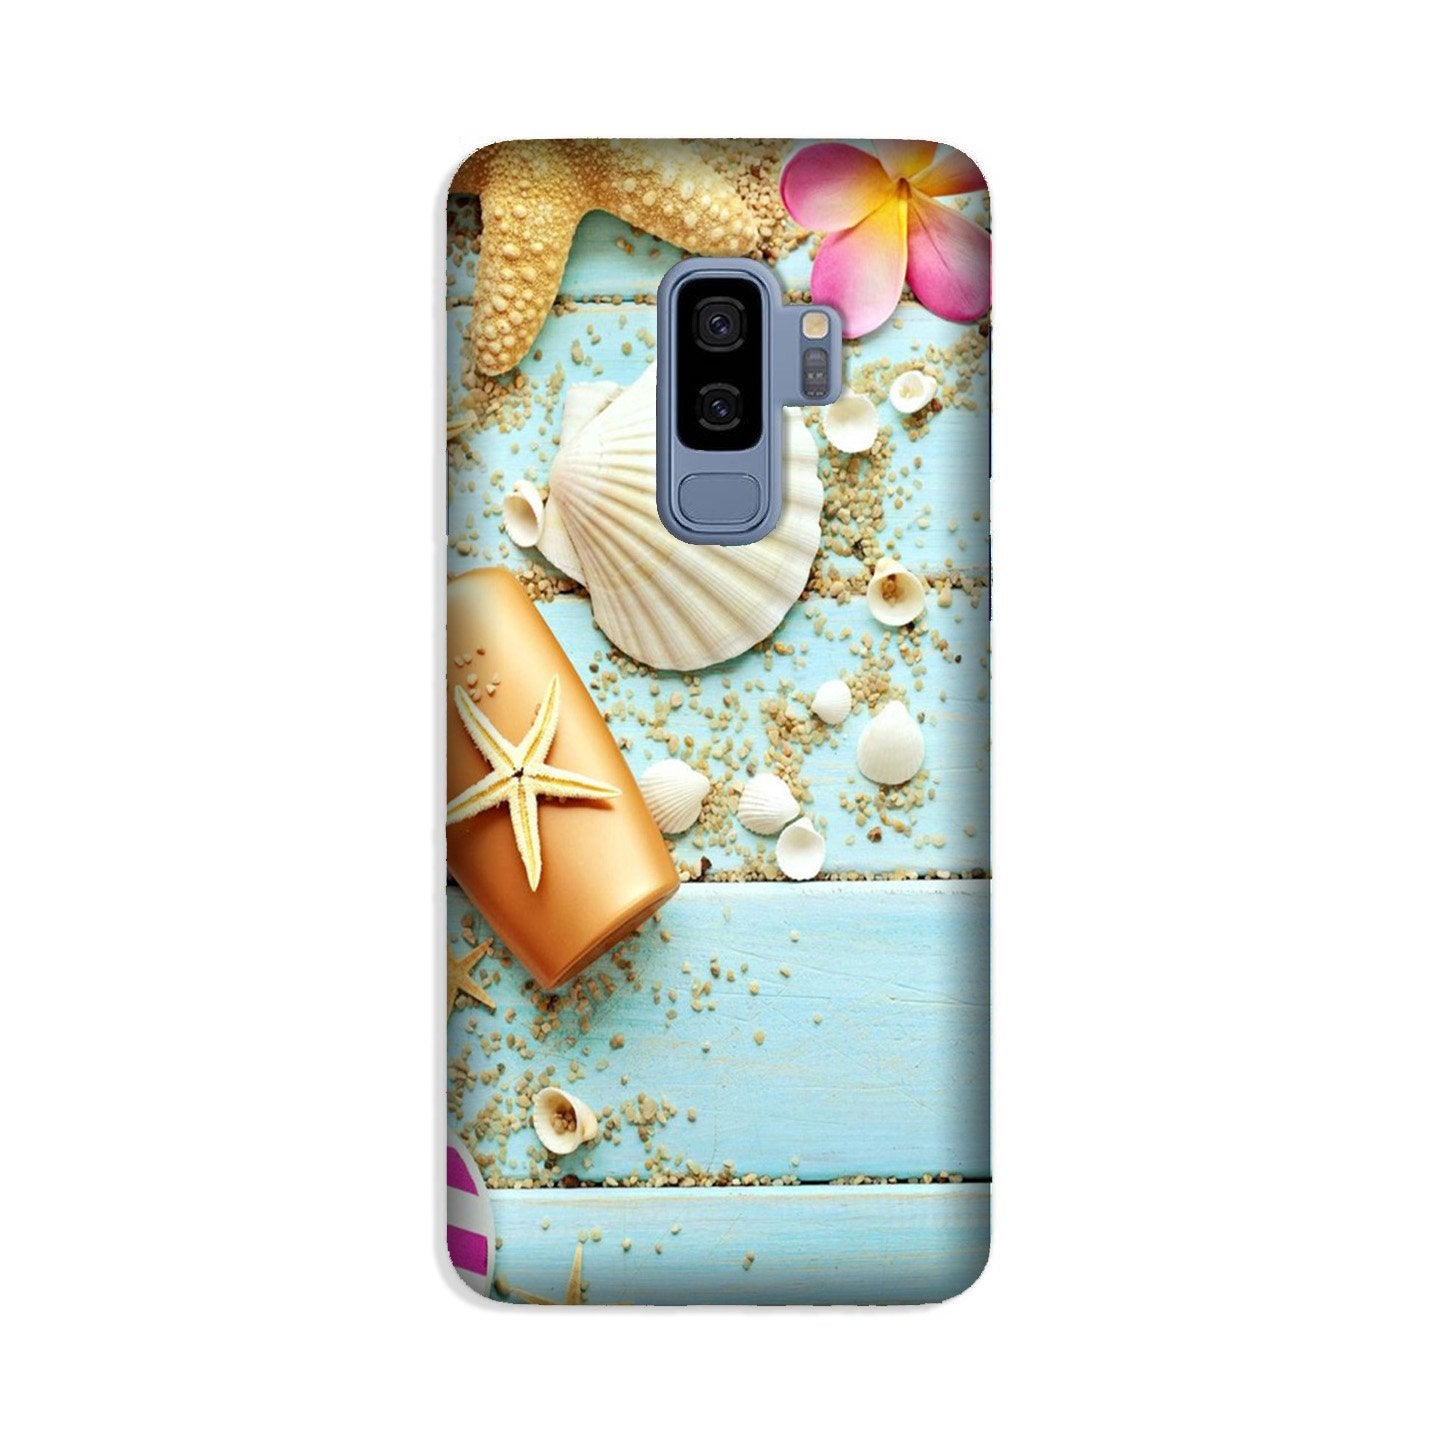 Sea Shells Case for Galaxy S9 Plus